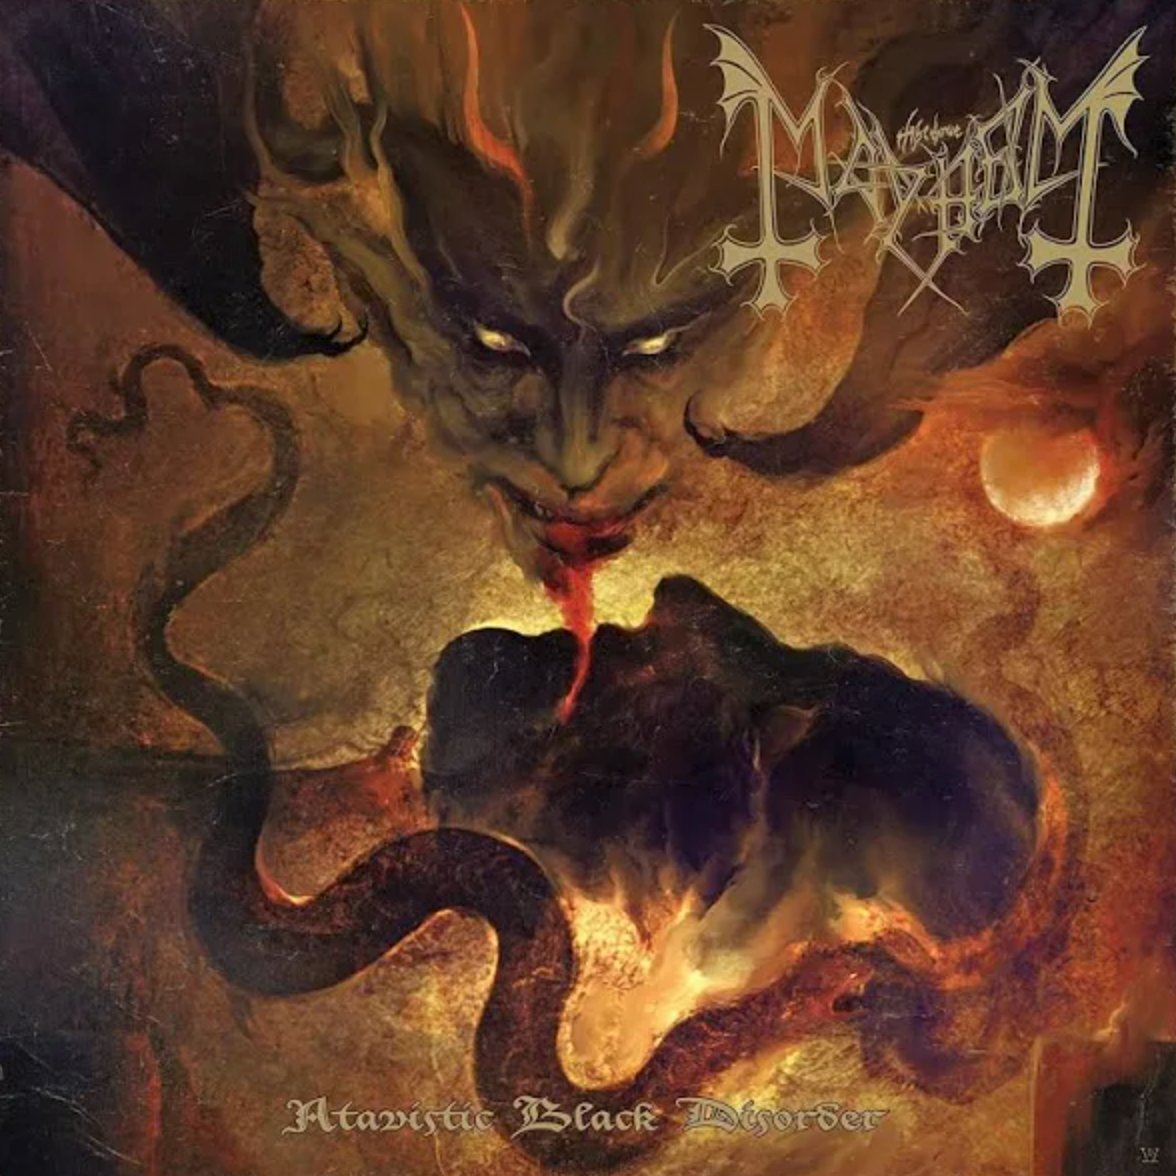 [DAMAGED] Mayhem - Atavistic Black Disorder / Kommando [EP] [Colored Vinyl]